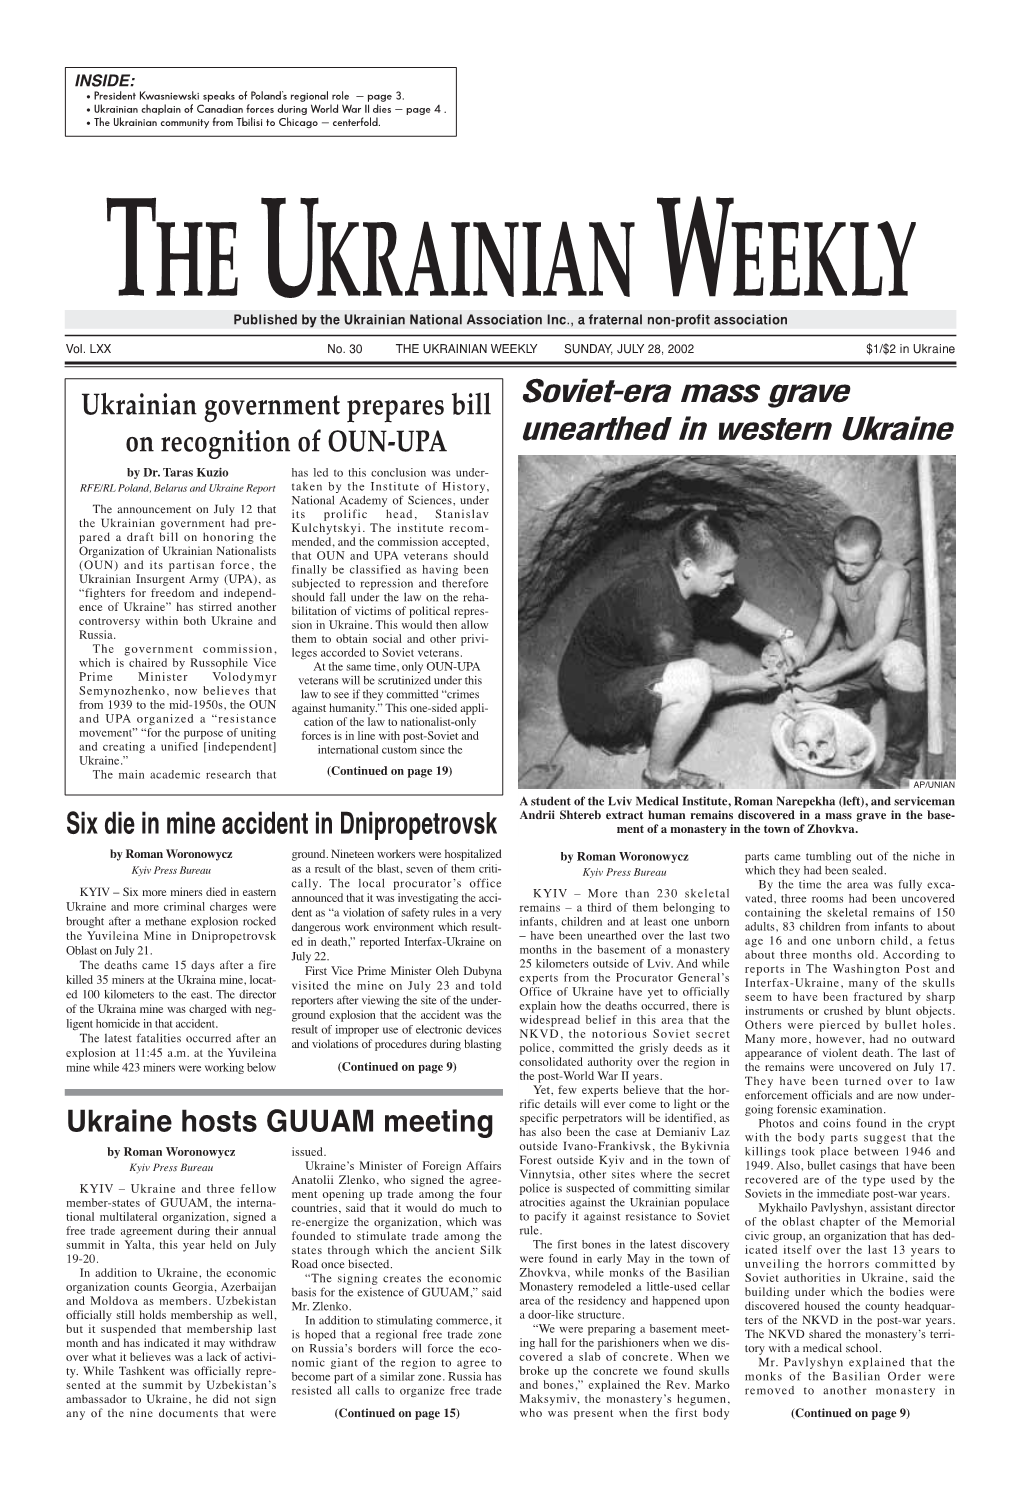 The Ukrainian Weekly 2002, No.30